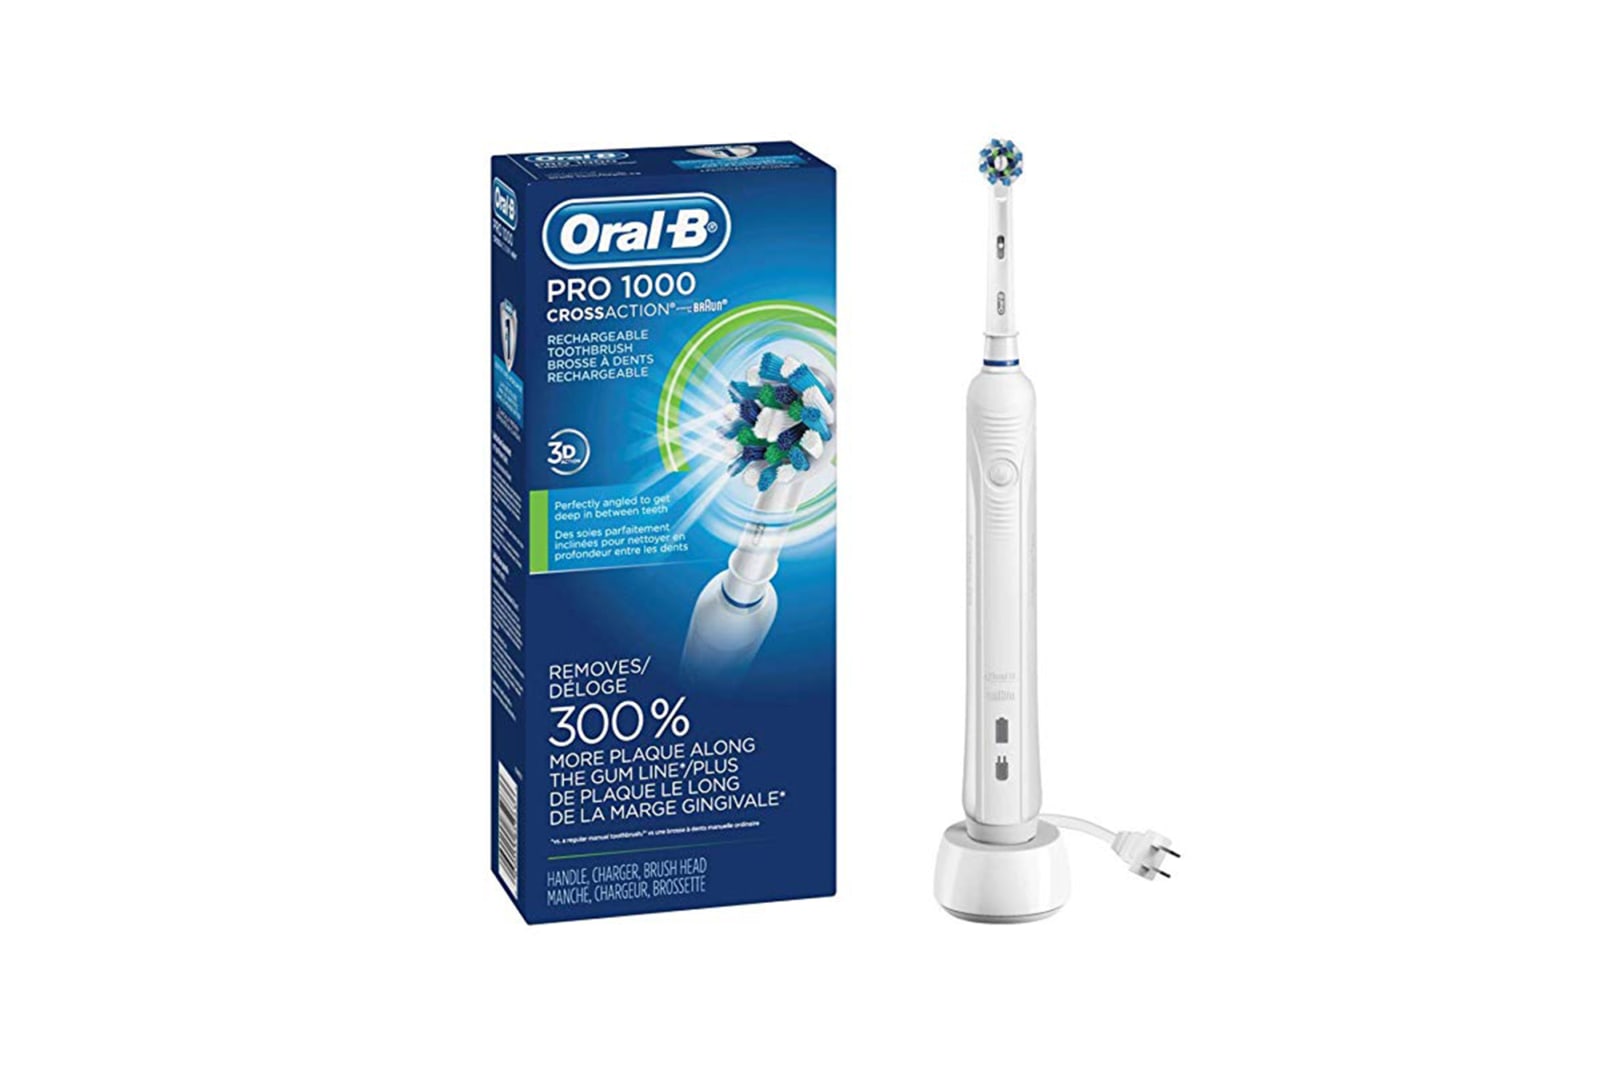 Oral-B Pro 1000 electric toothbrush